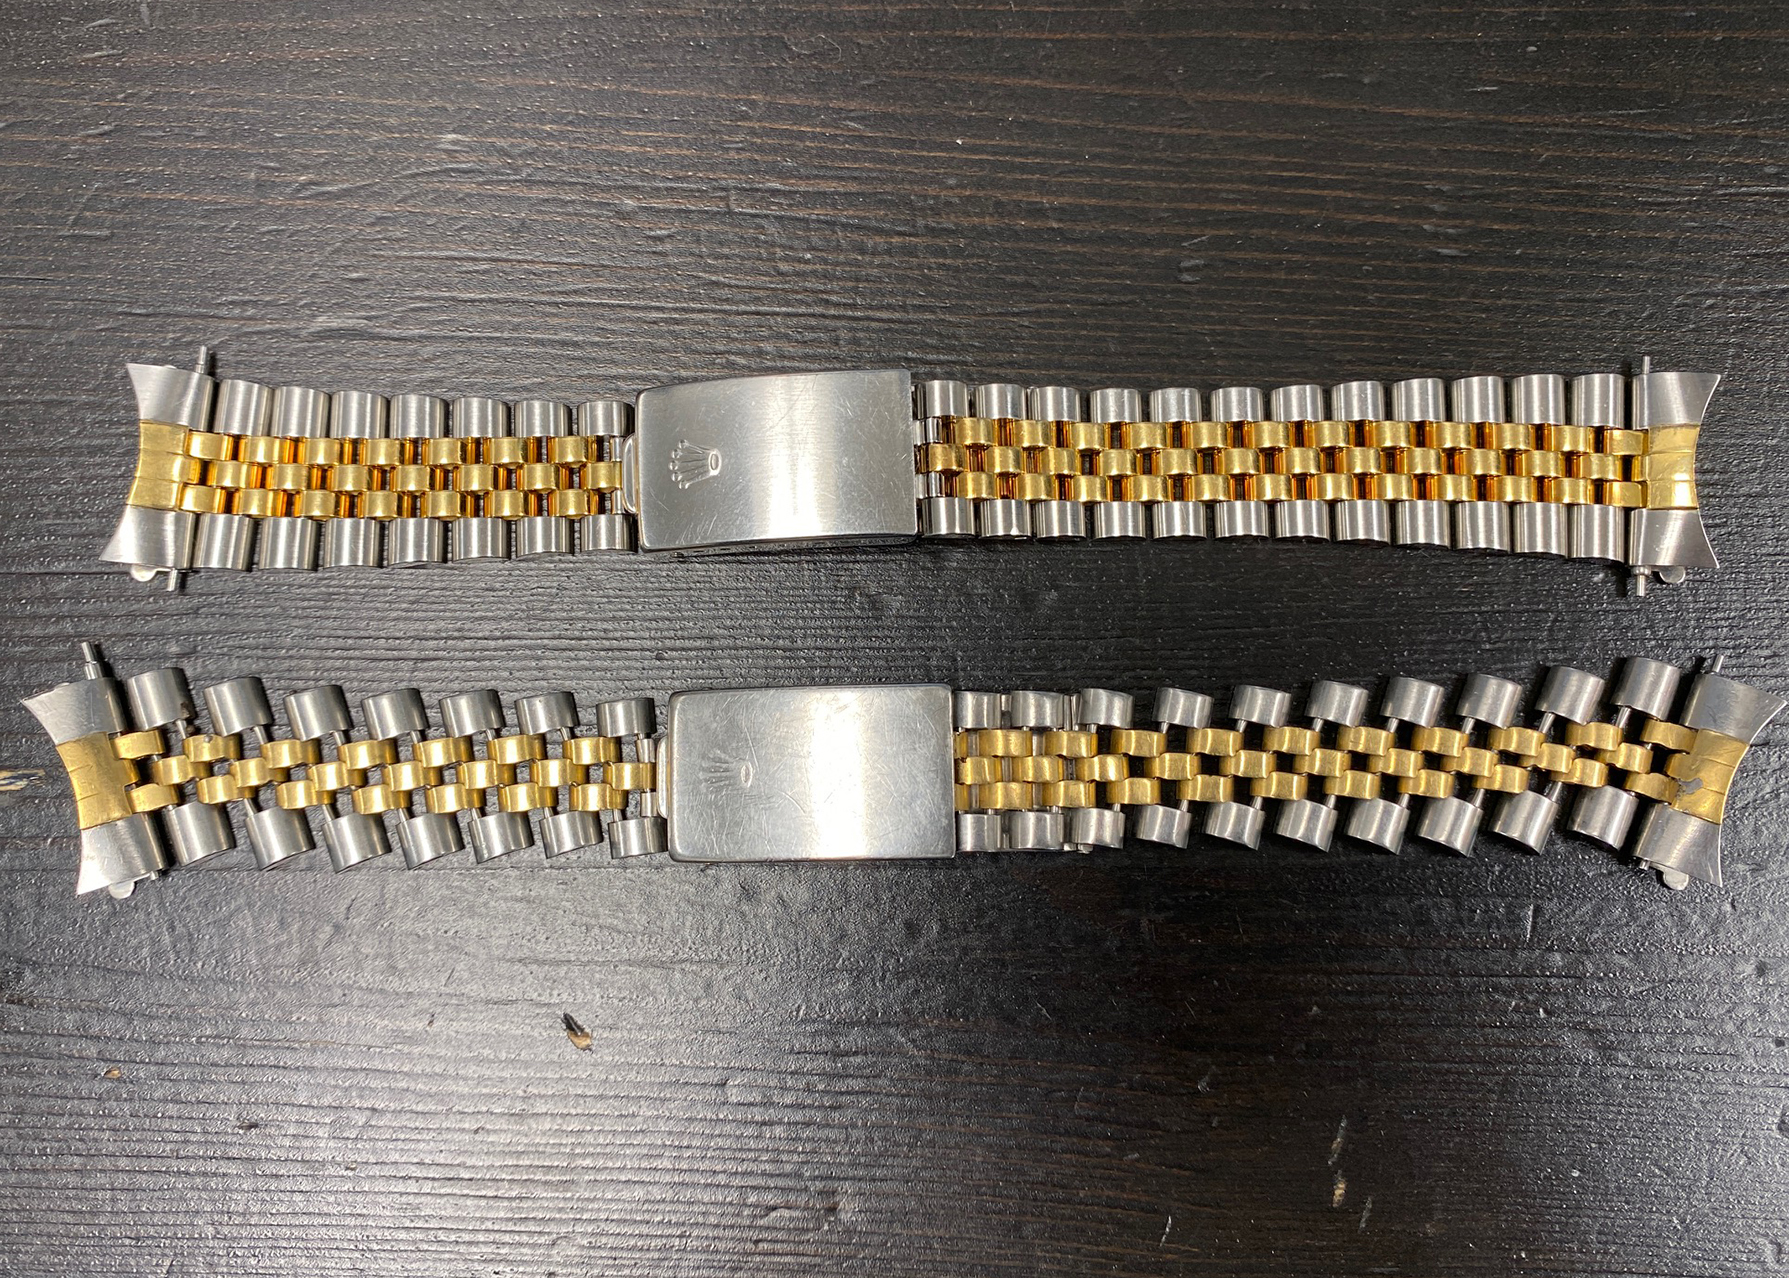 Rolex bracelet tightening.